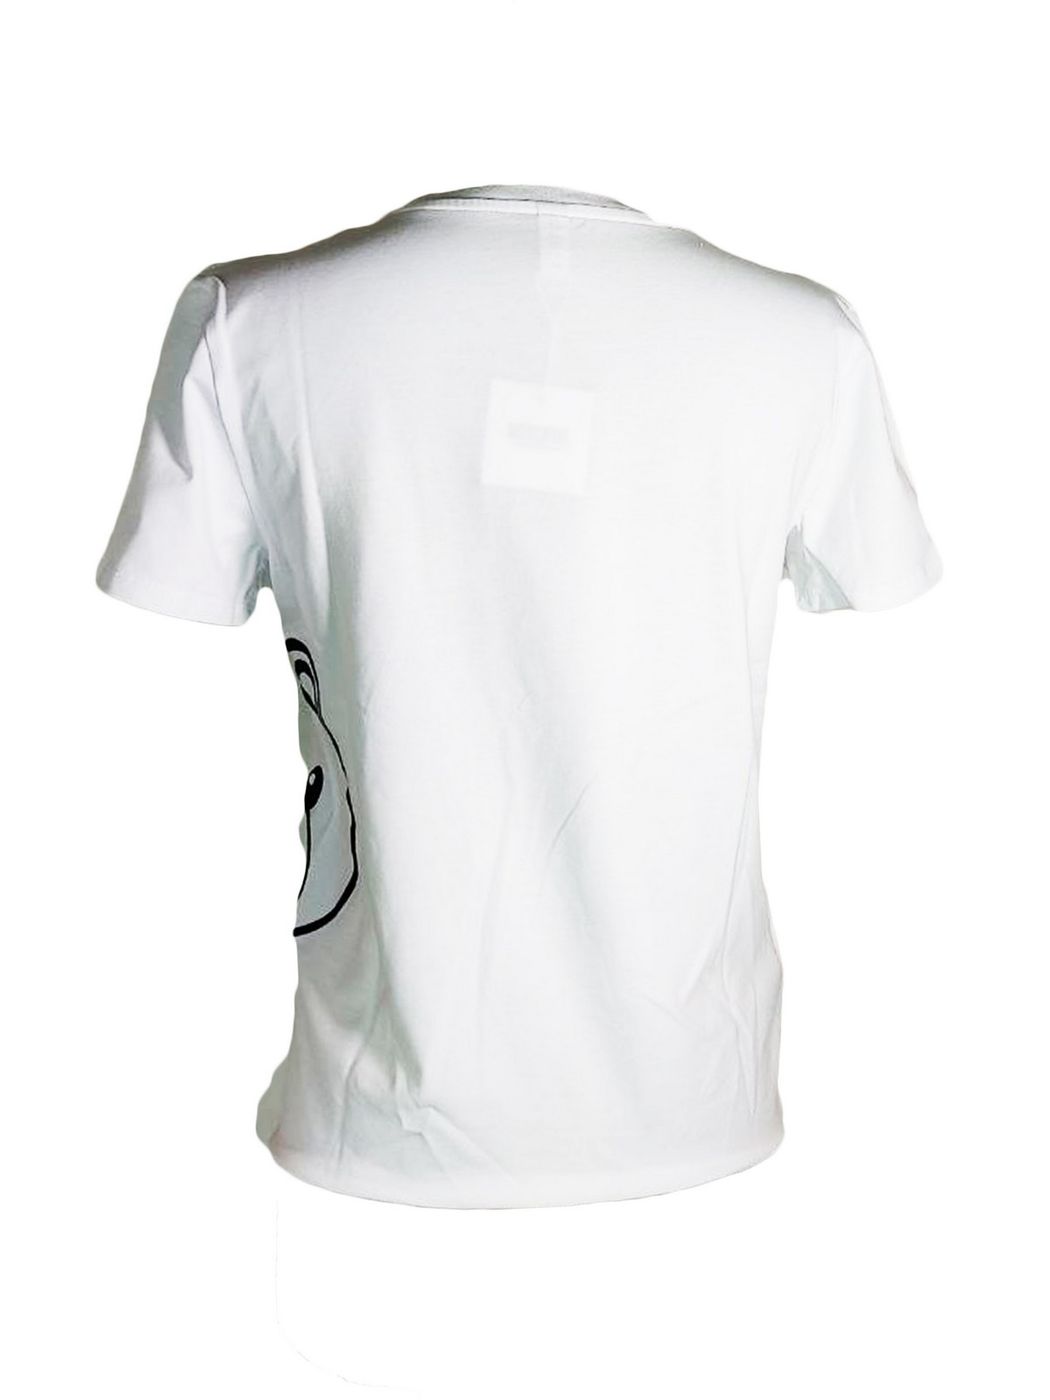 MOSCHINO UNDERWEAR T-shirt et polo femmes ZUA1903 9008 0001 Blanc